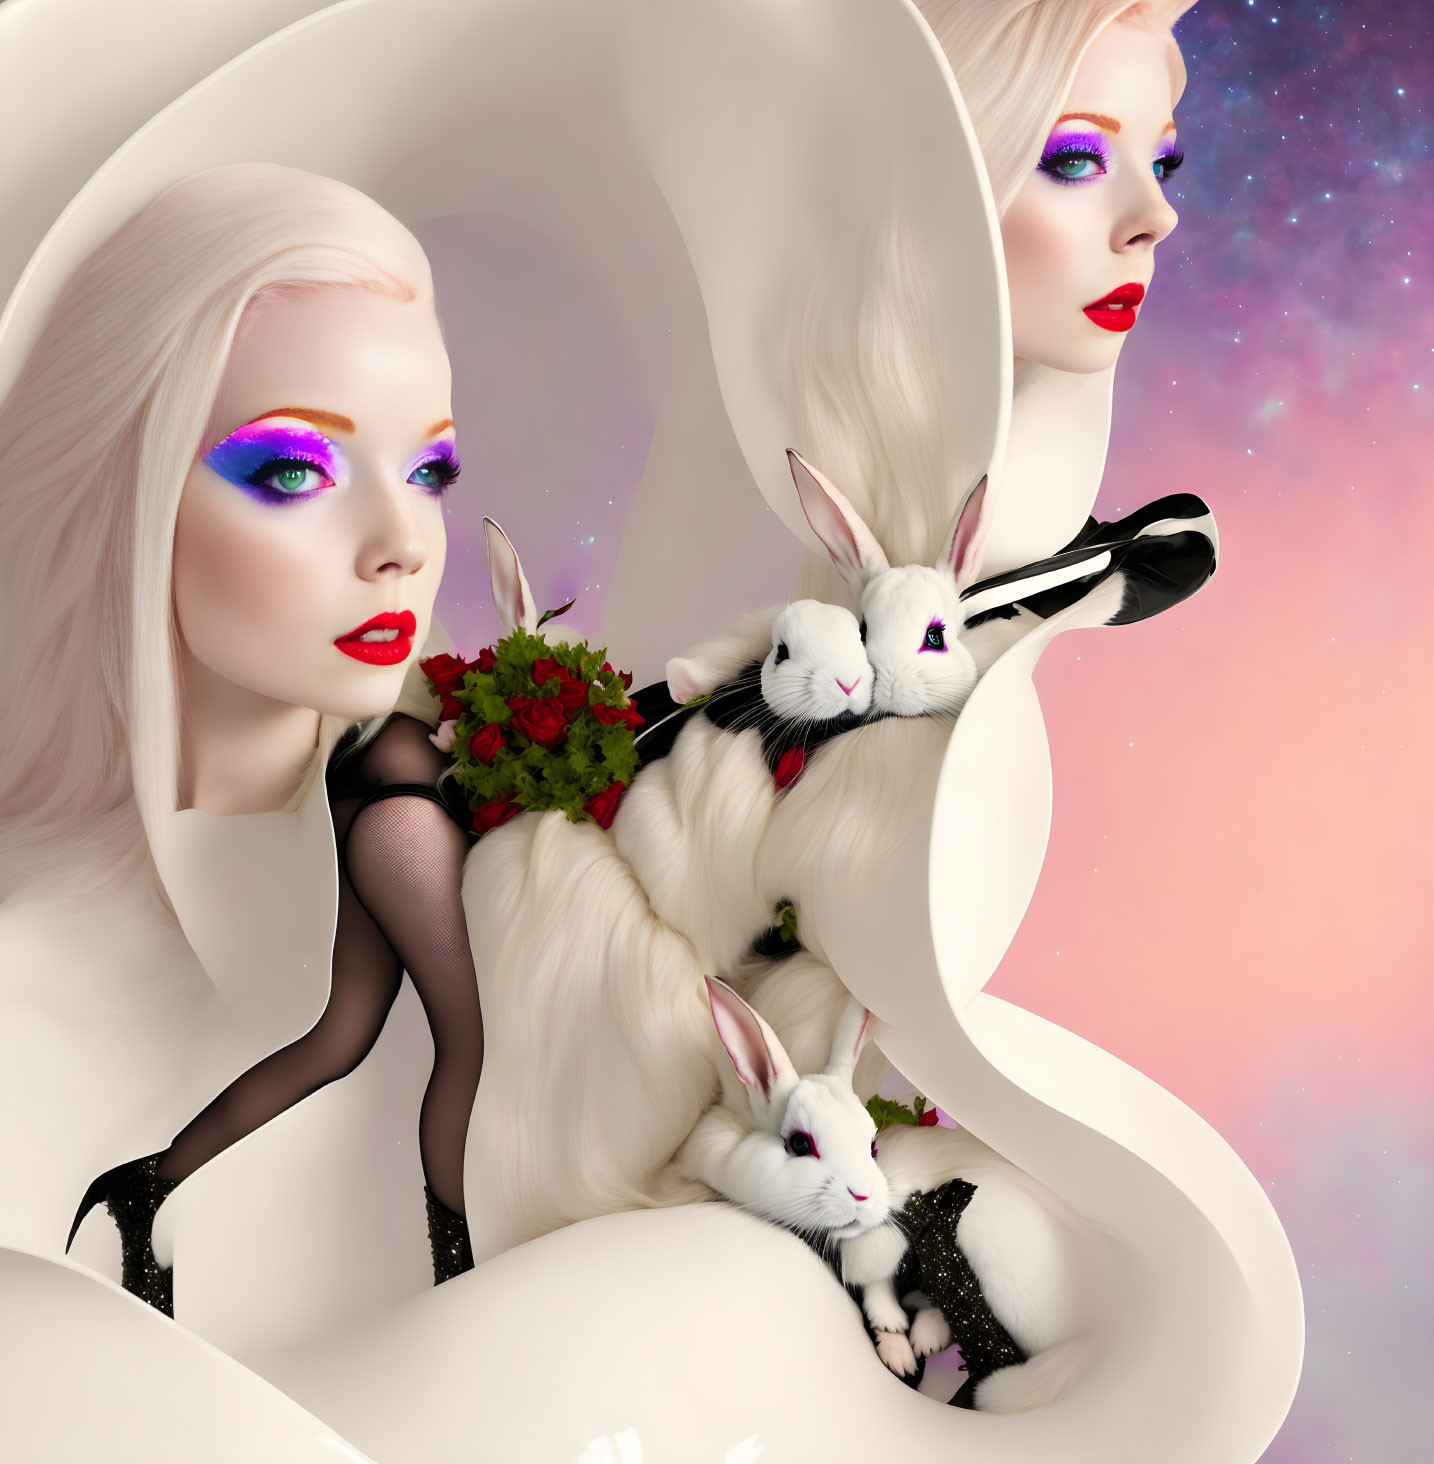 Surreal image: Identical women, vibrant makeup, white rabbits, cosmic backdrop, swirling design